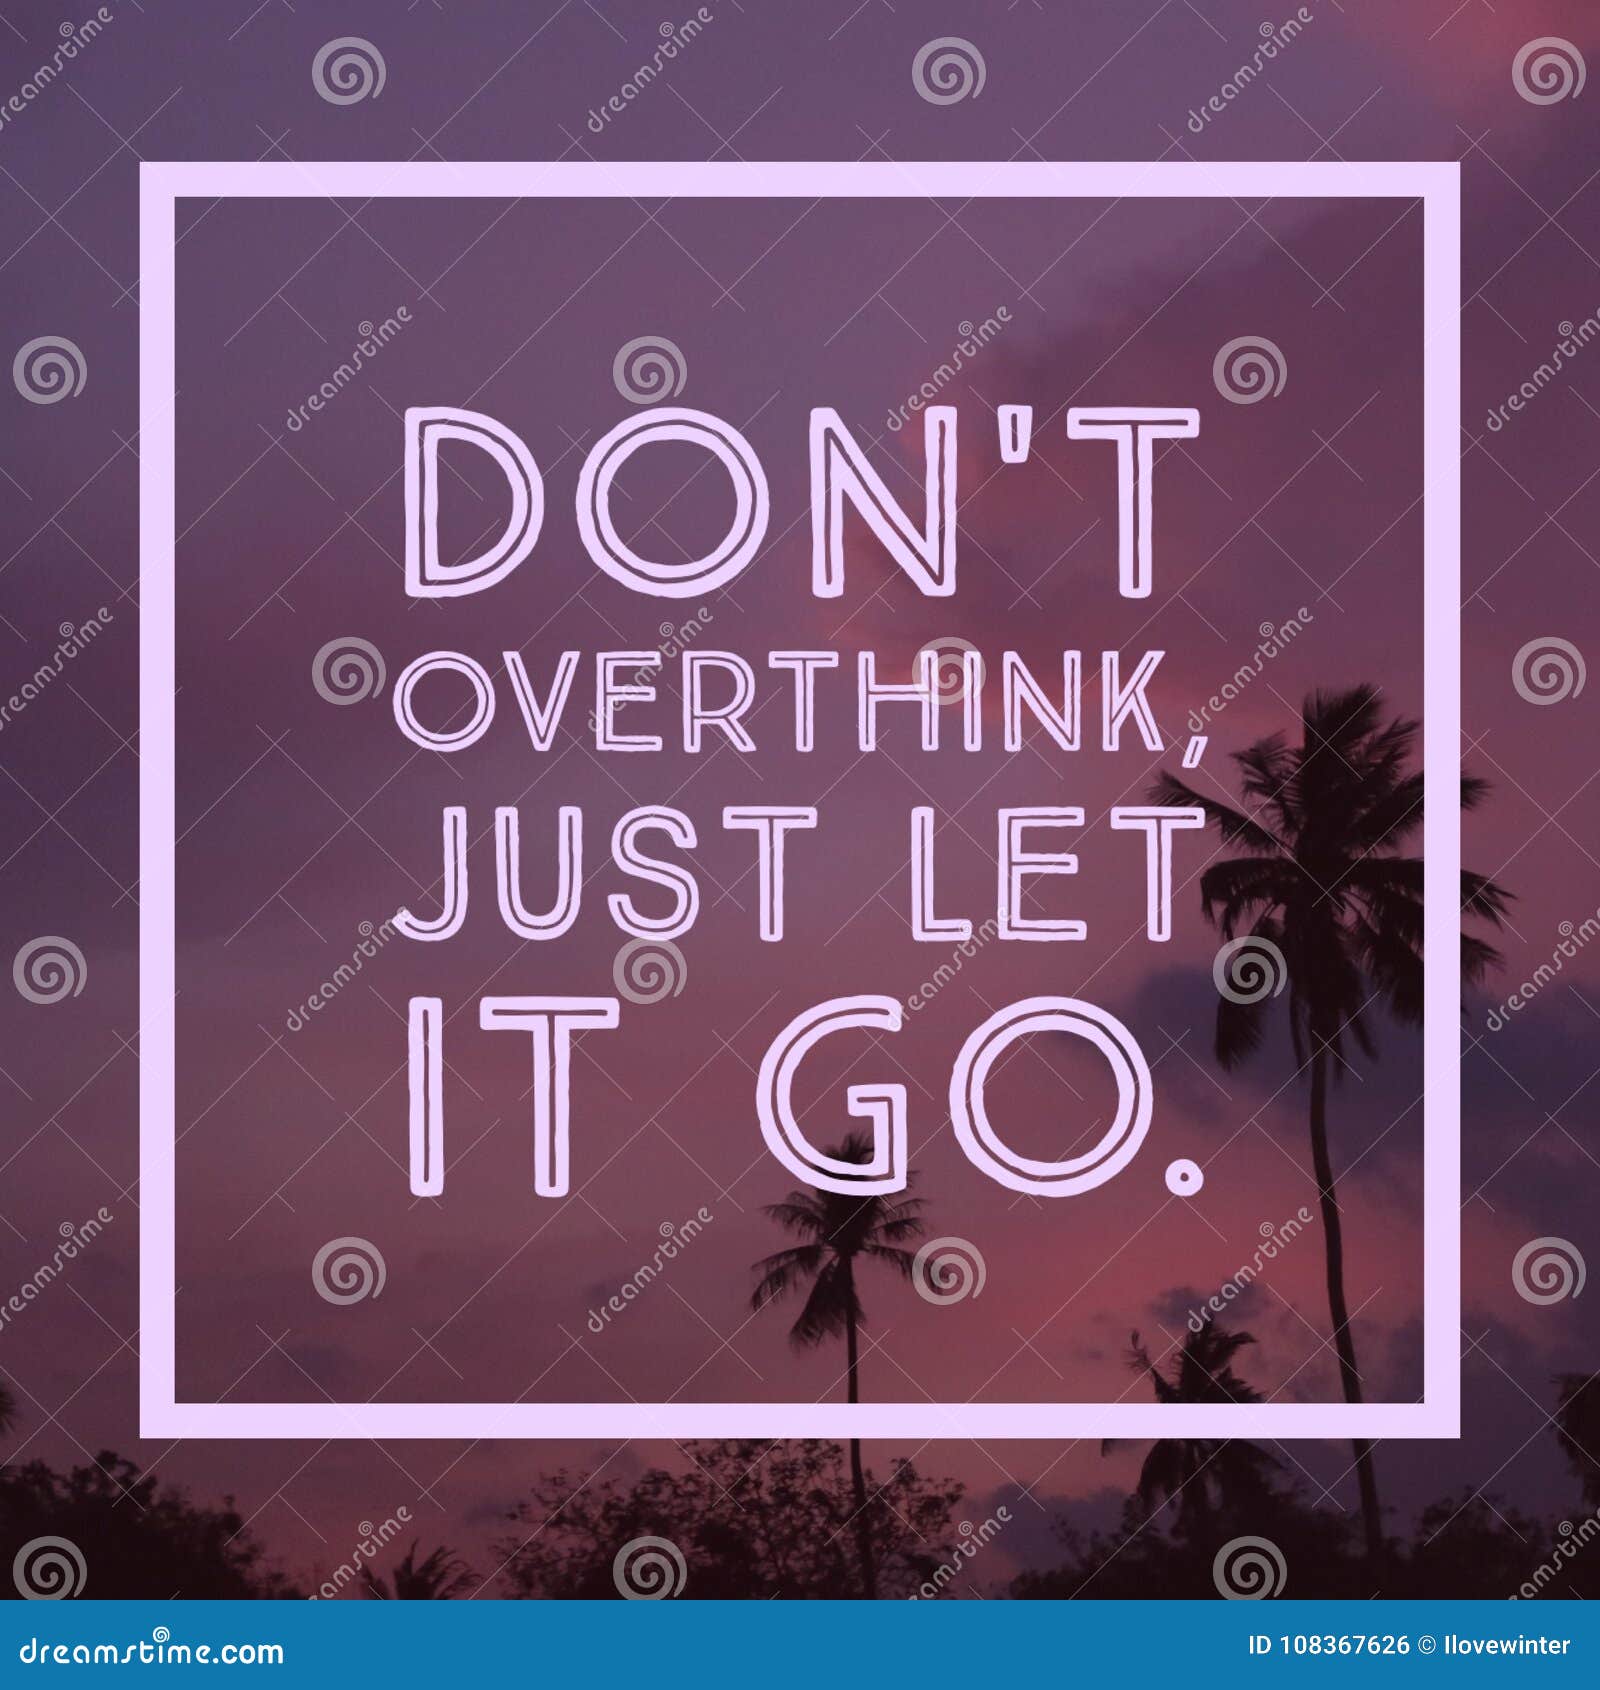 Dont lets go. Don't overthink it. Don't Let go Вдохновляющие картинки. Yaeow - don't overthink it. Just go it тёмные.